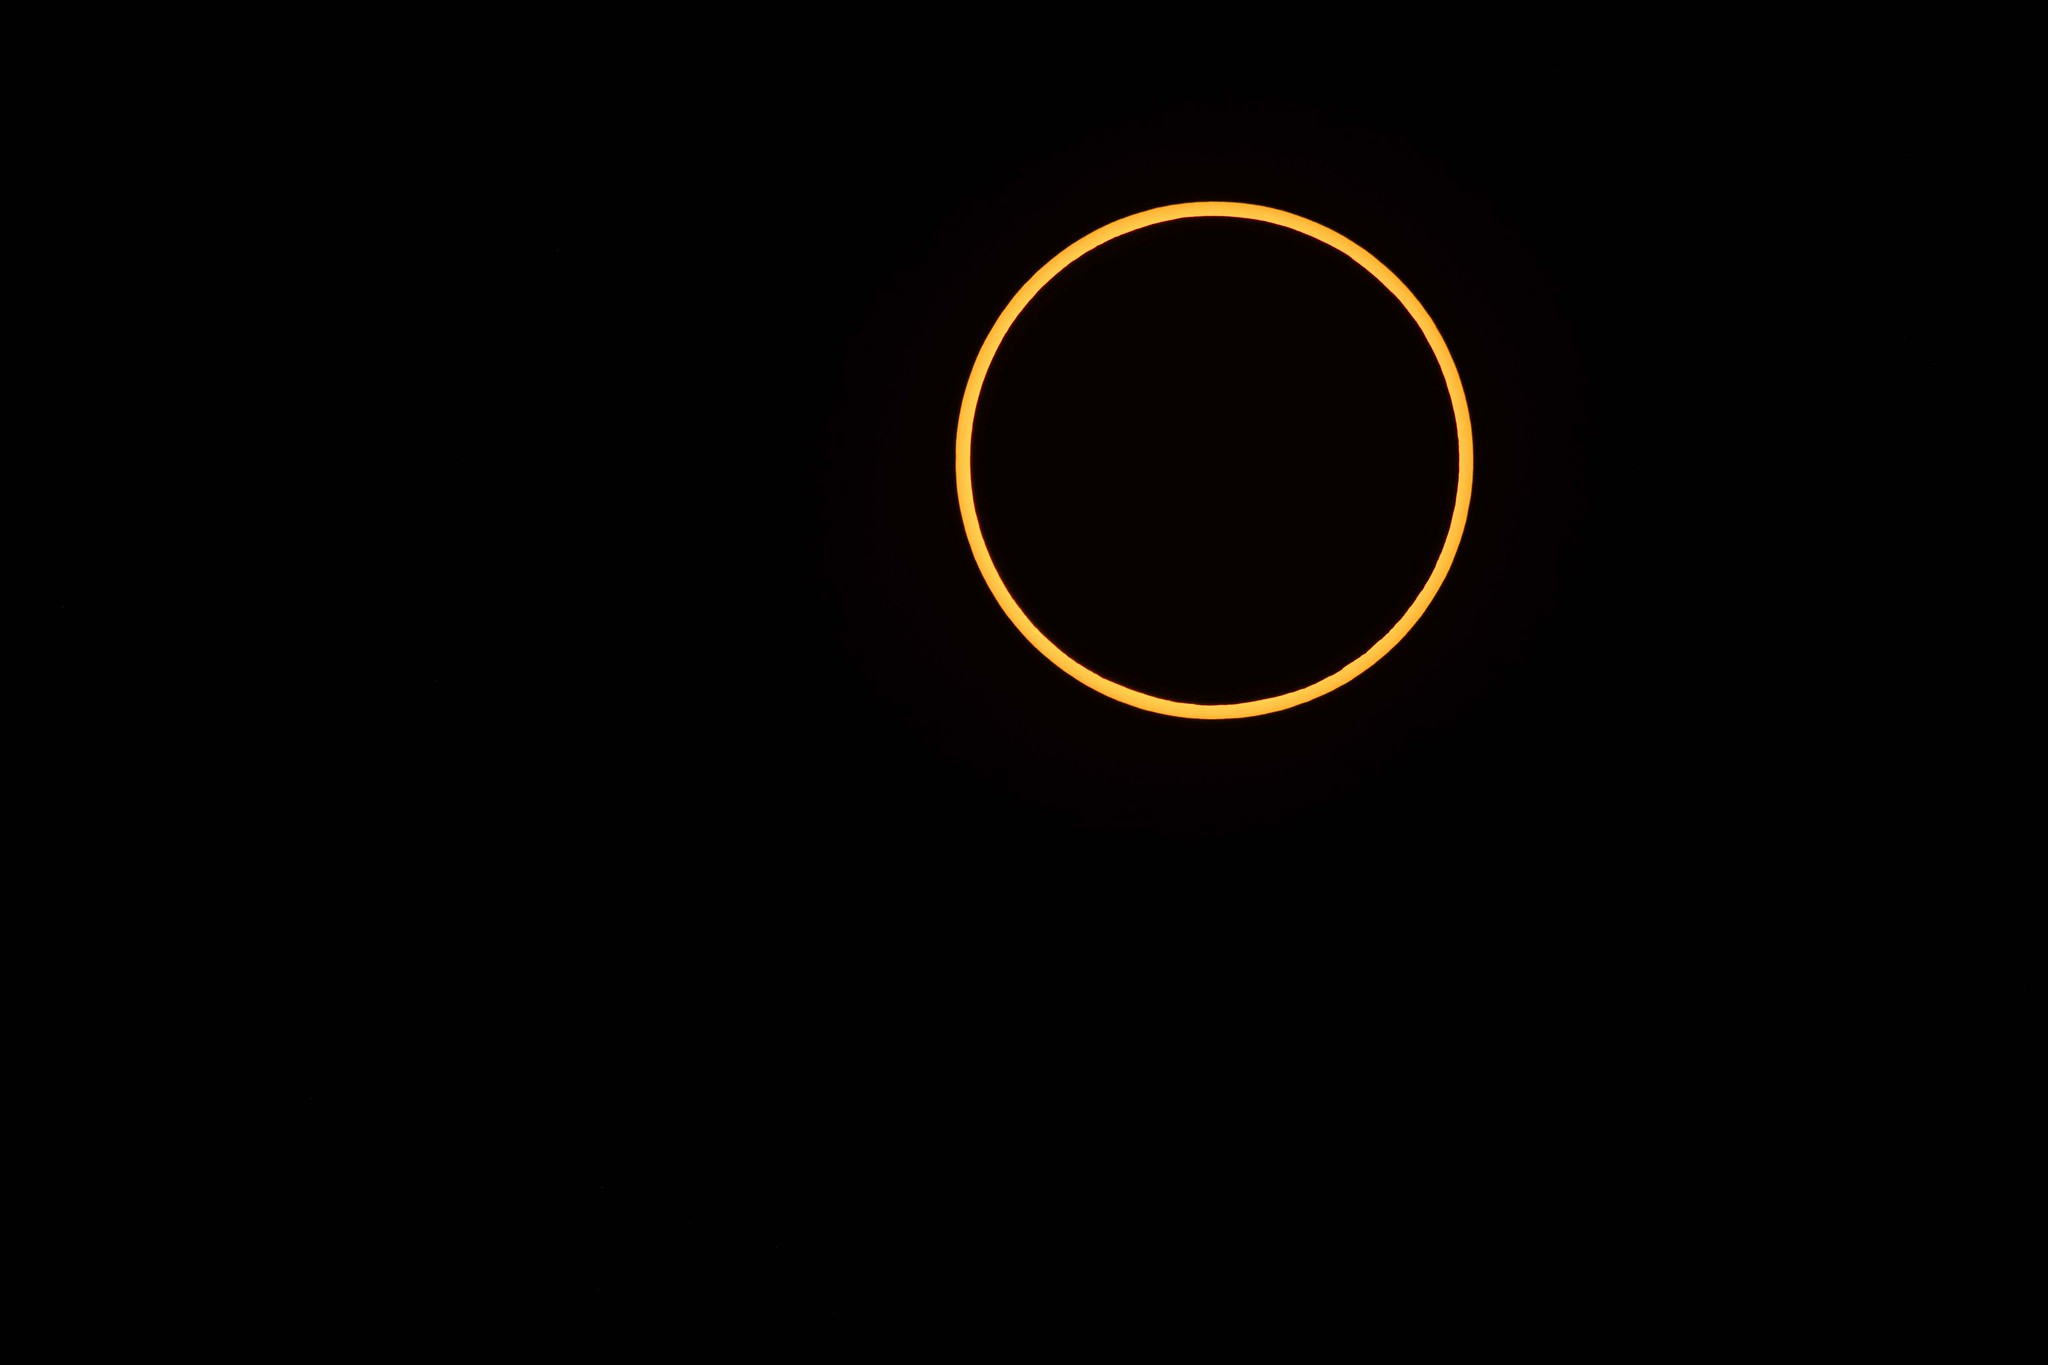 A thin orange circle against a black background